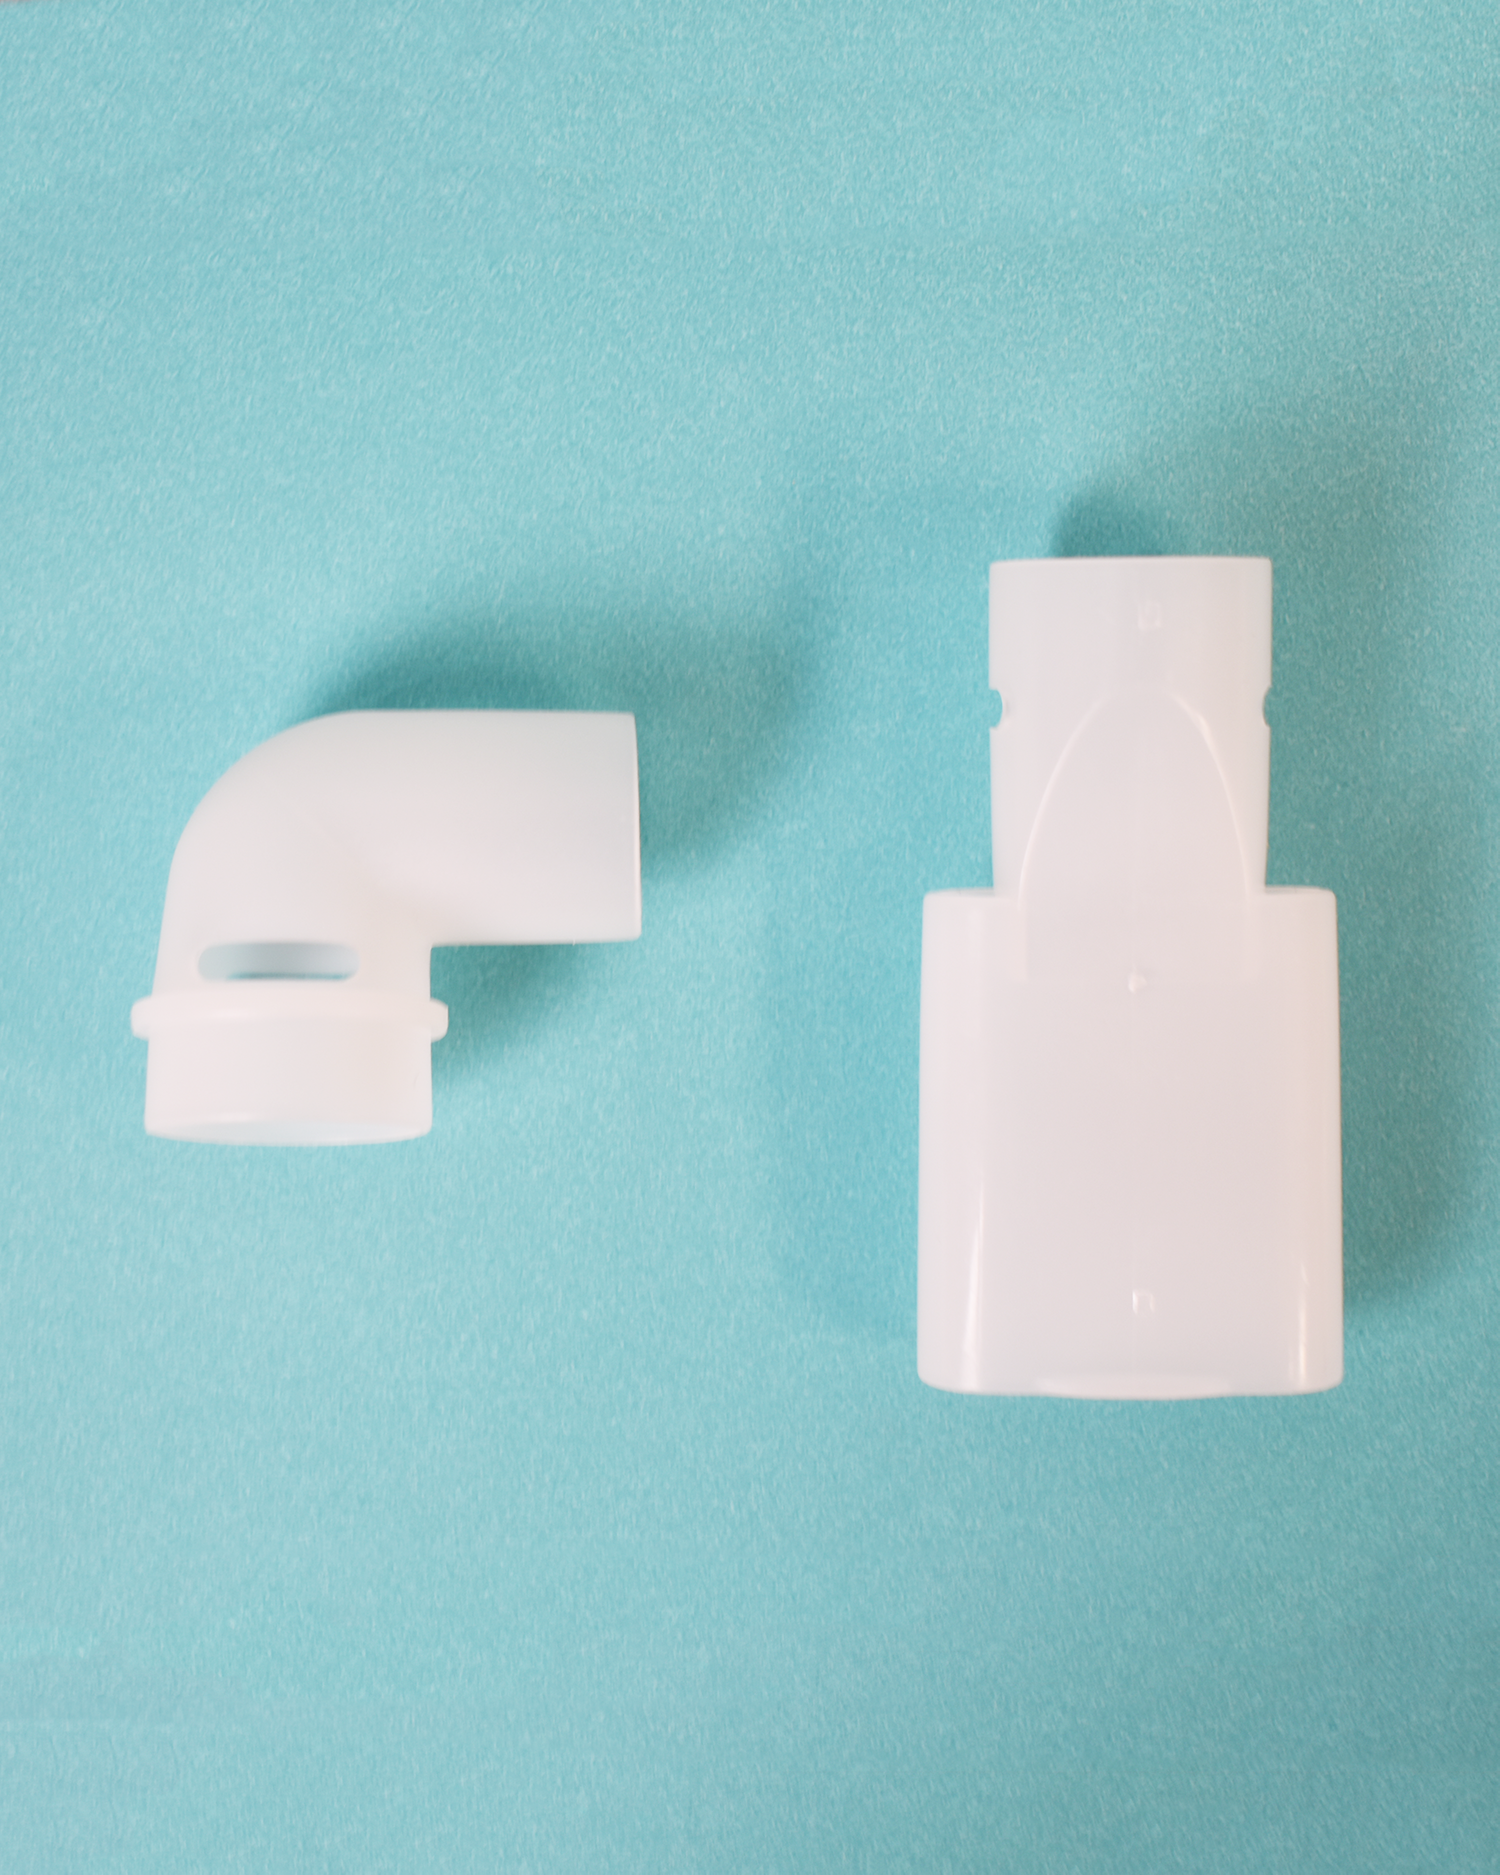 Electronic Vibrating Pocket Mesh Nebulizer Medication Cup, Mouthpiece, and Mask Adapter